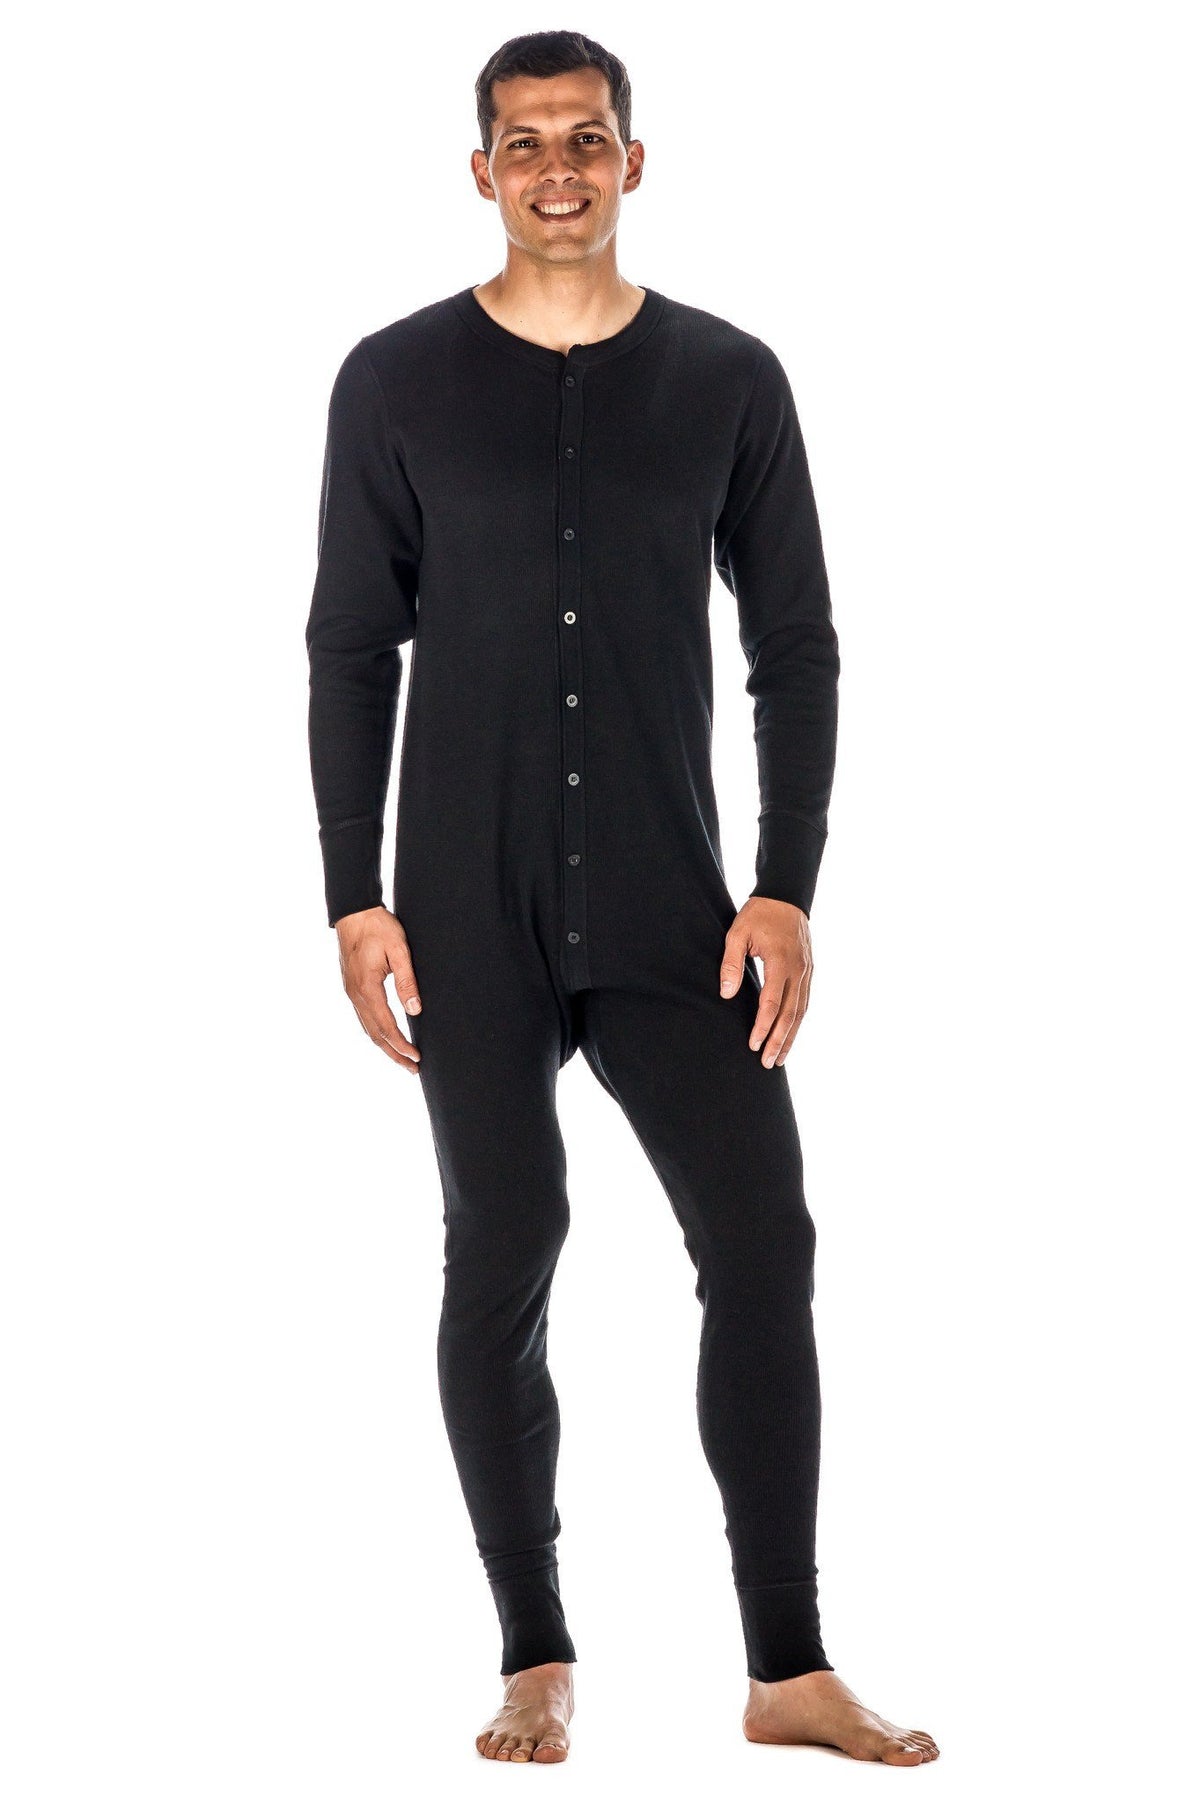 Men's Waffle Knit Thermal Union Suit - Black